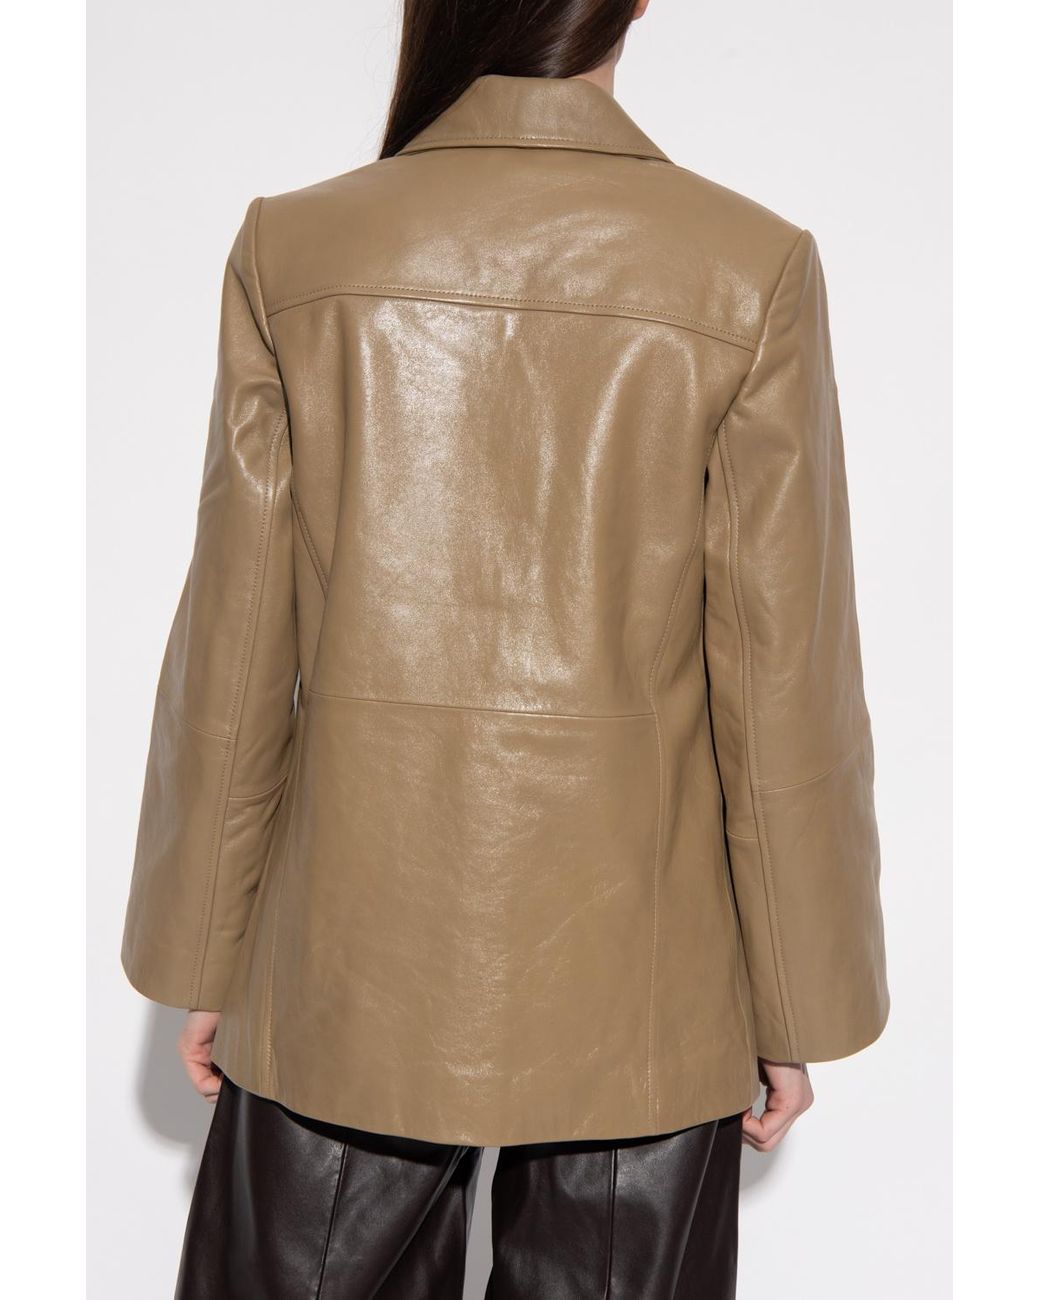 Samsøe & Samsøe jillian Leather Jacket in Brown Womens Clothing Jackets Leather jackets 